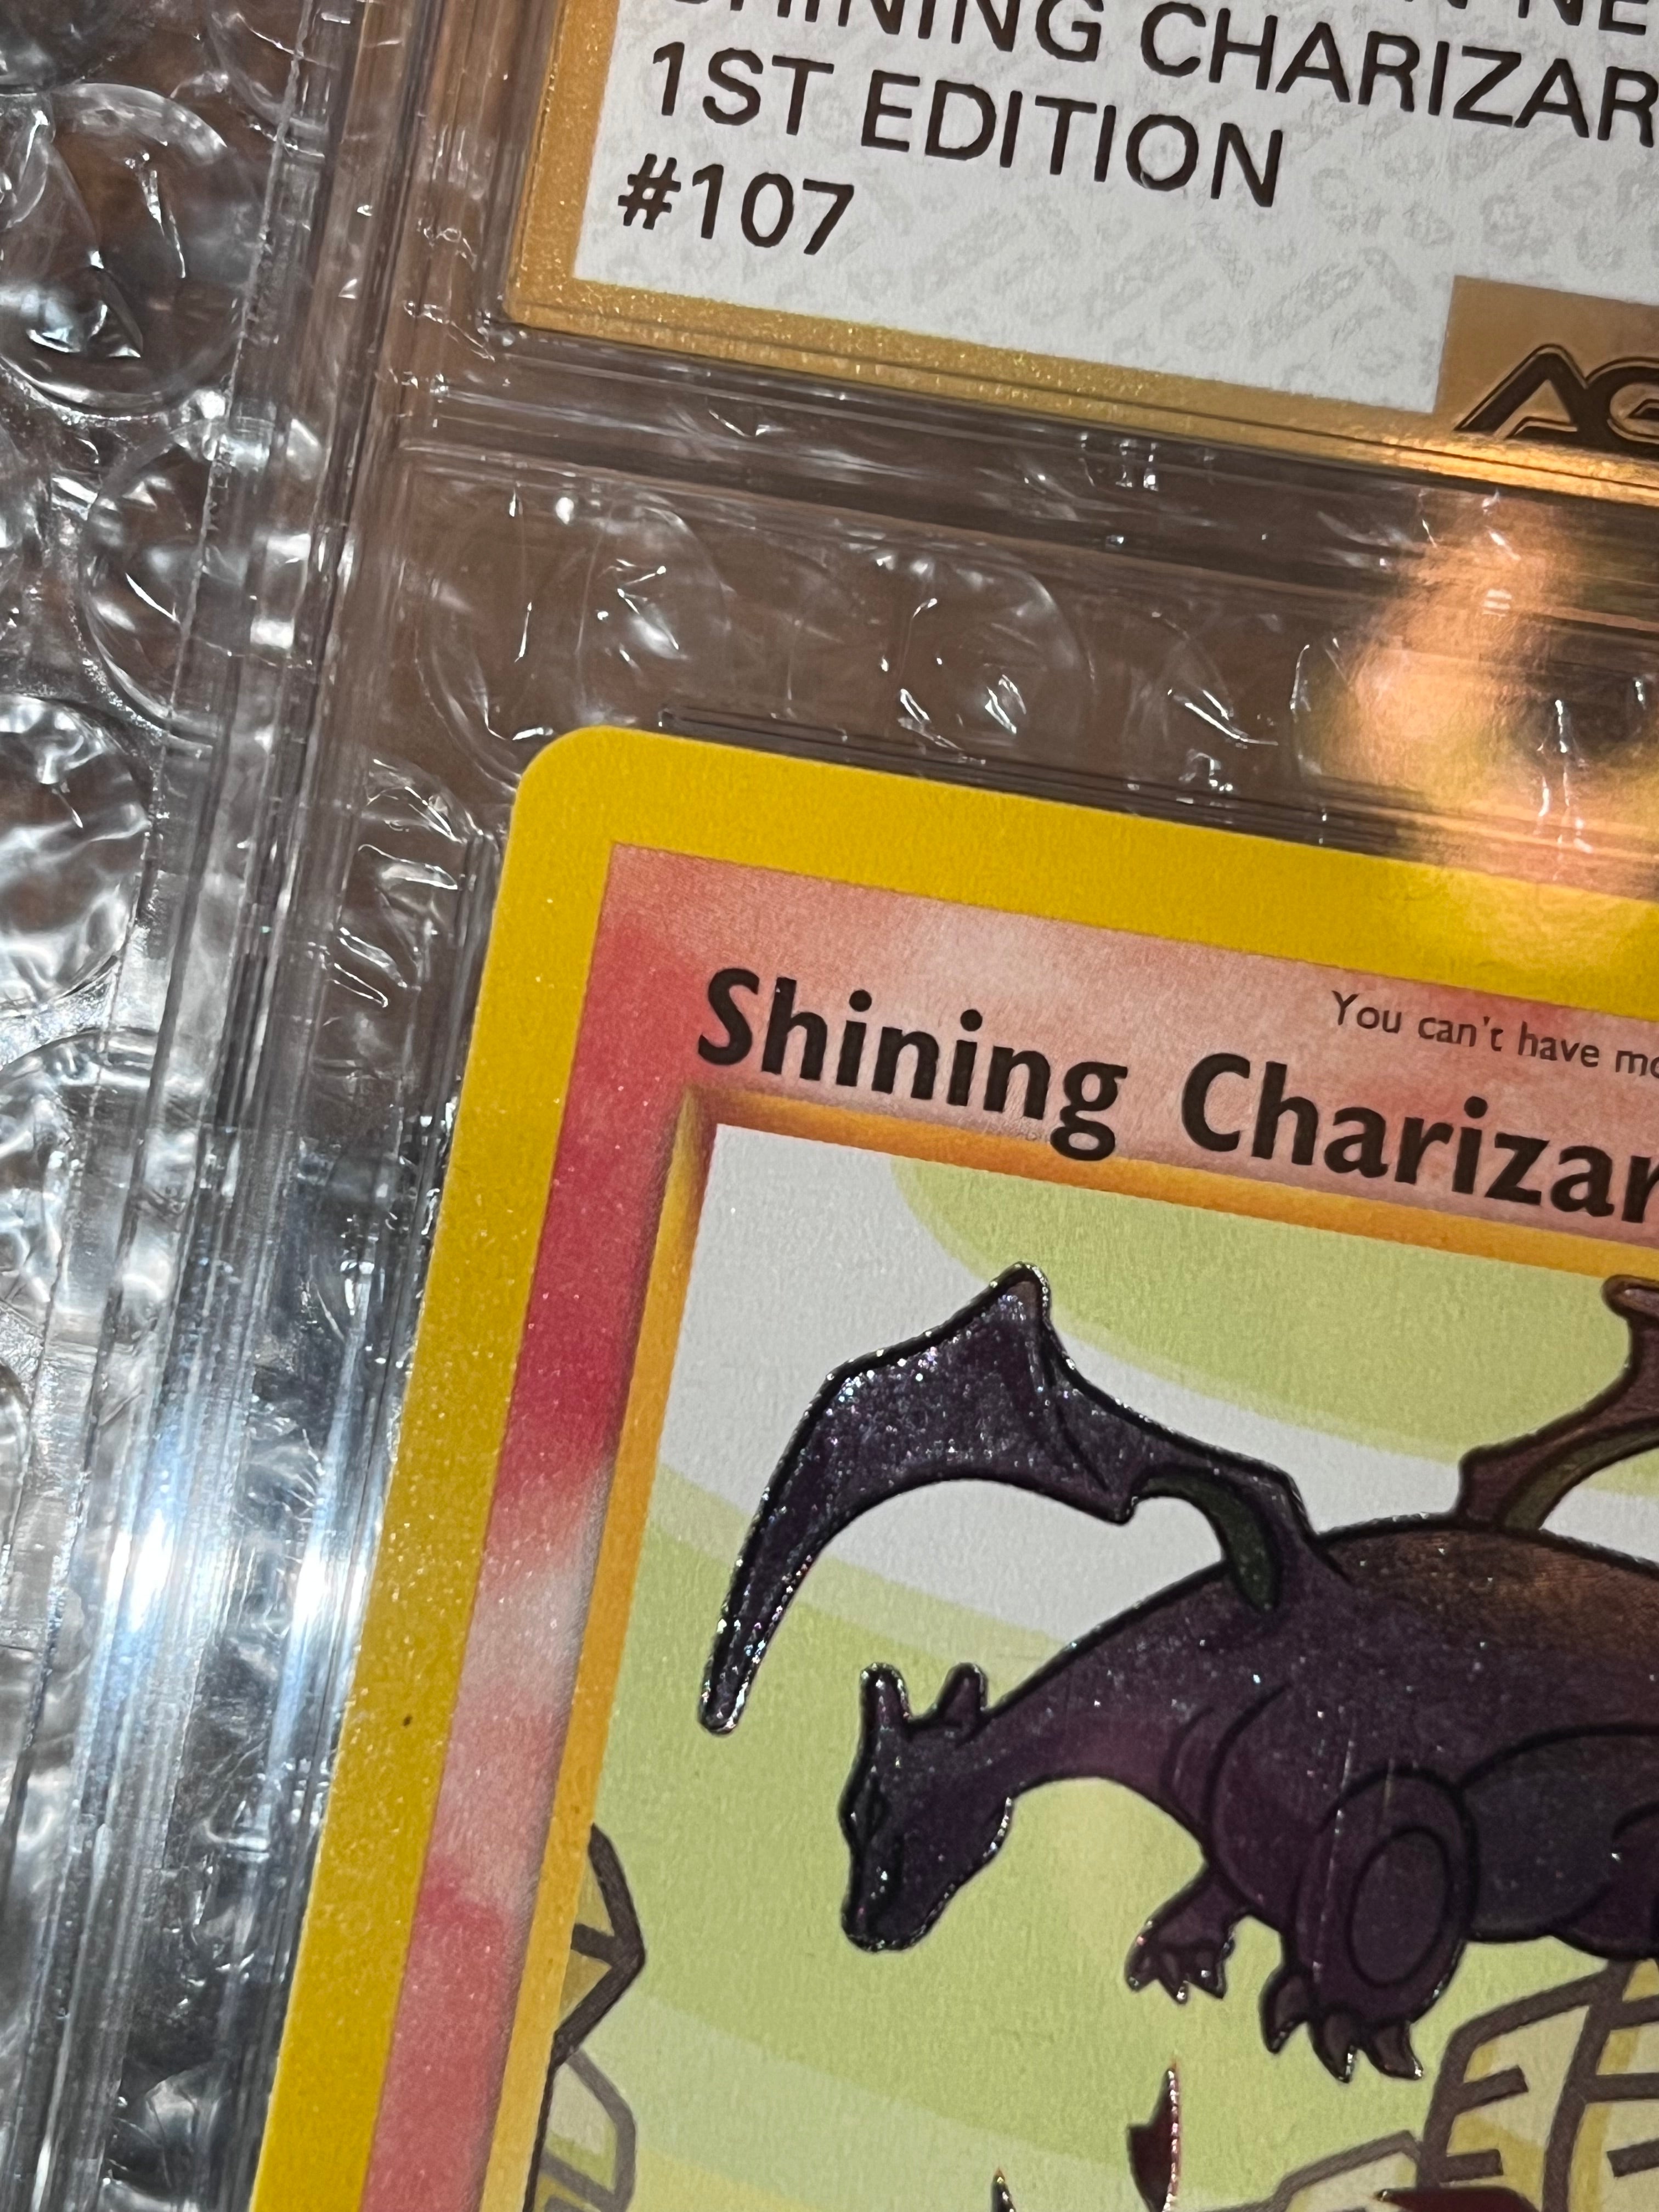 AGS (GEM-MT 10) Shining Charizard #107 - Neo Destiny (1st Edition) (#00049408)